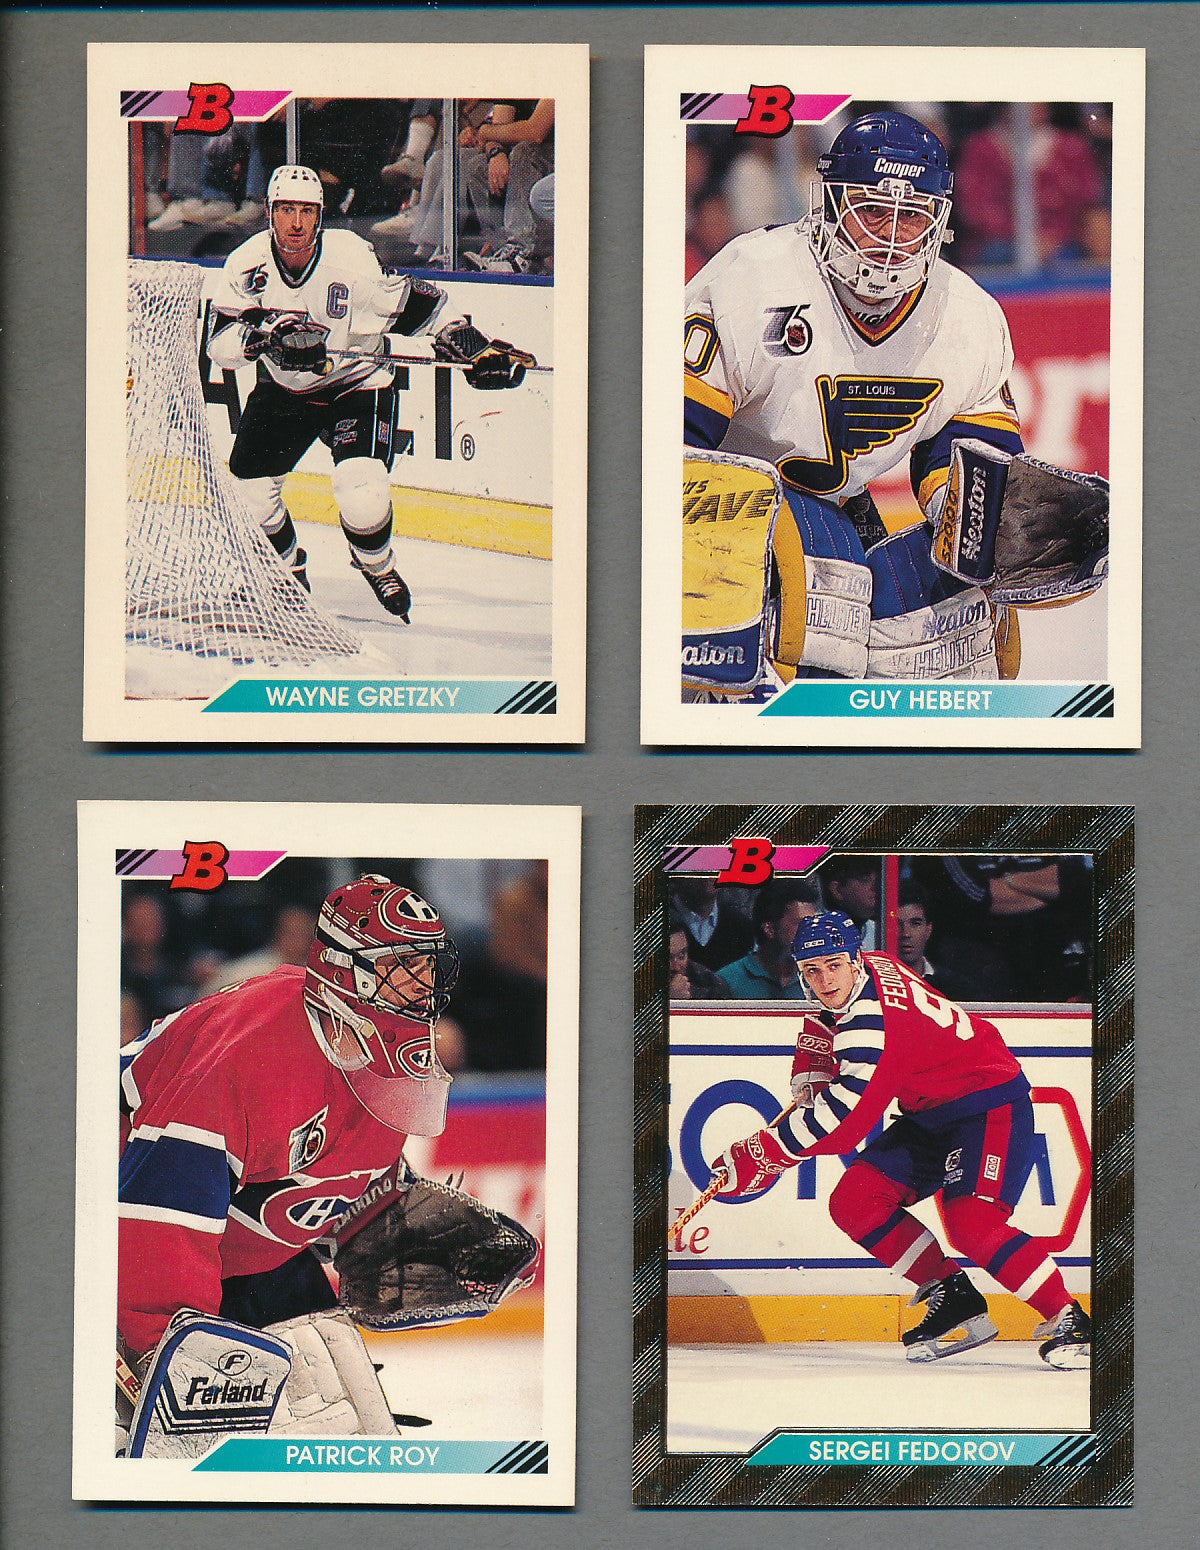 1992/93 Bowman Hockey Complete Set (442)  NM/MT MT